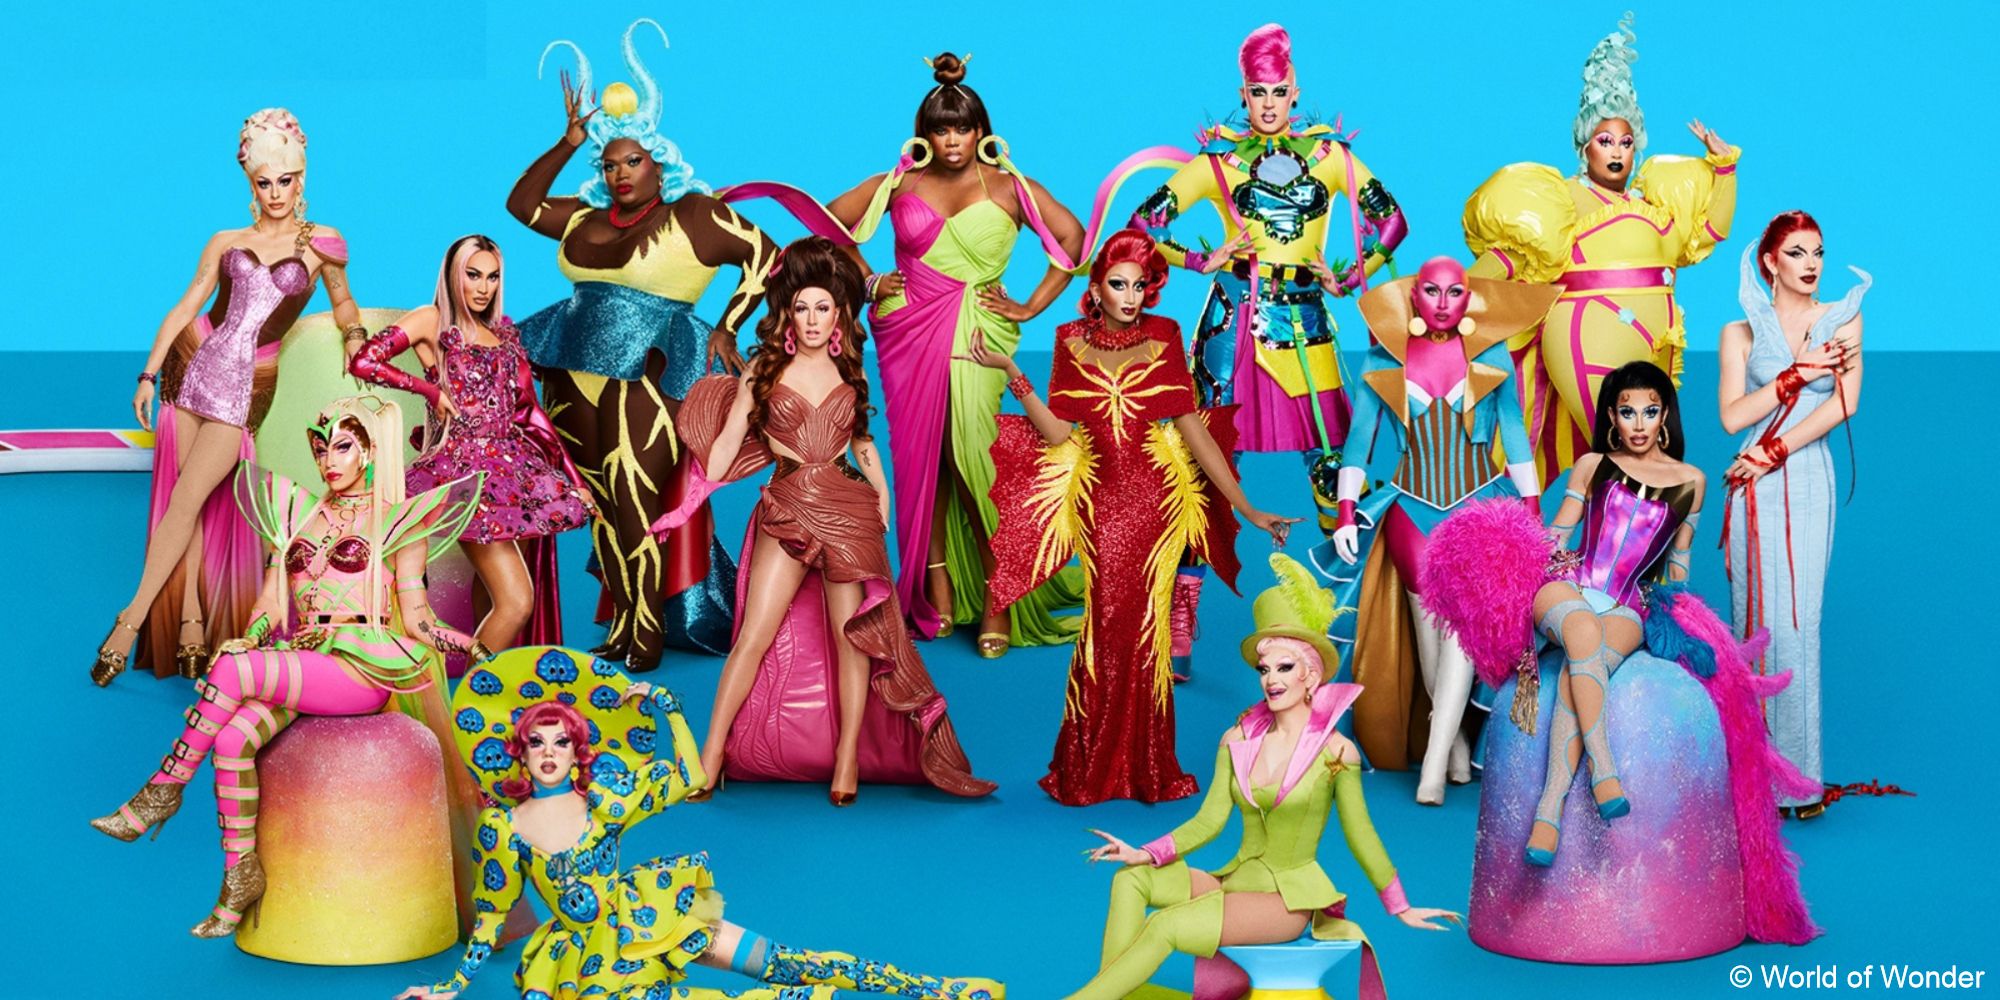 Pemeran Drag Race Musim 14 RuPaul mengungkapkan gambar yang menggambarkan 14 waria dengan latar belakang teal